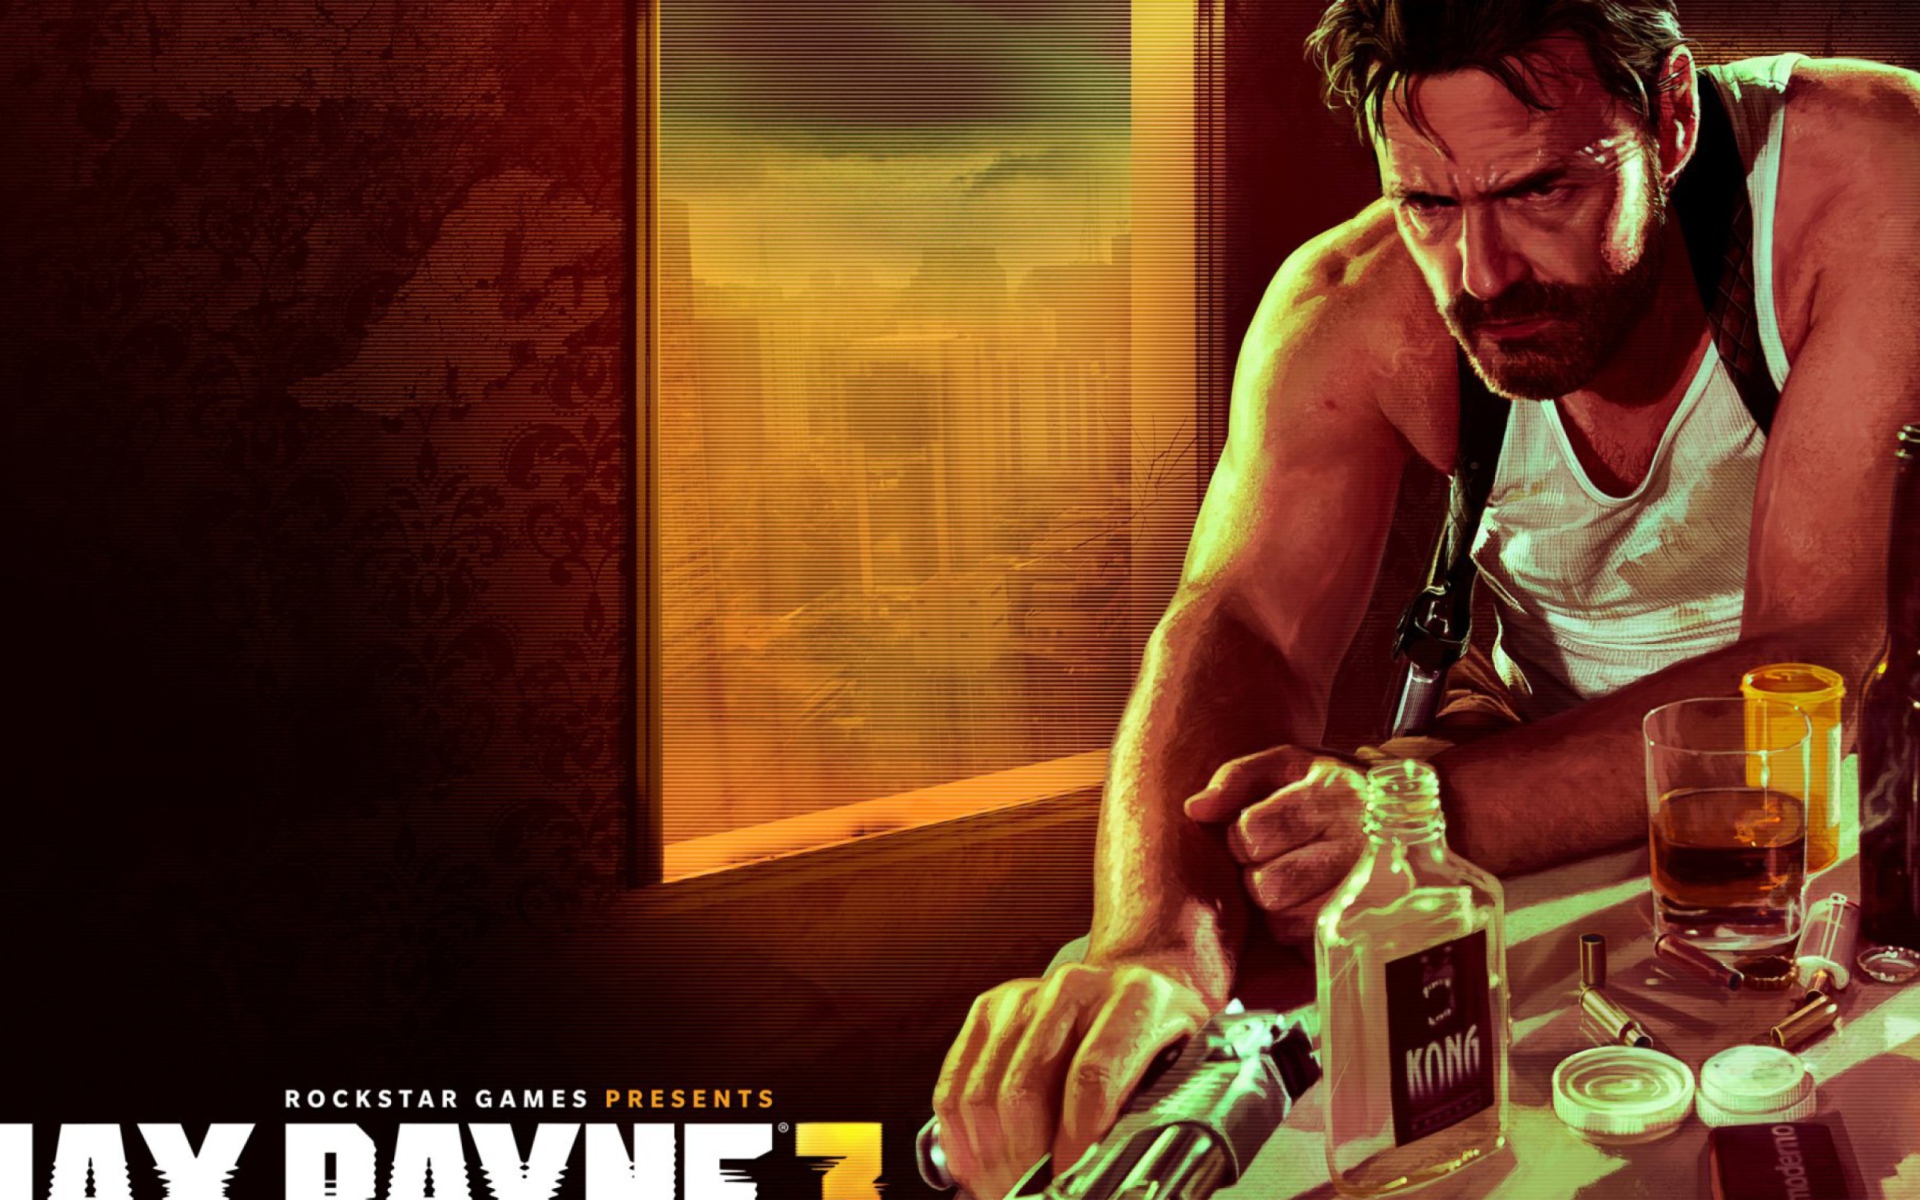 Das Max Payne 3 Pc Game Wallpaper 1920x1200